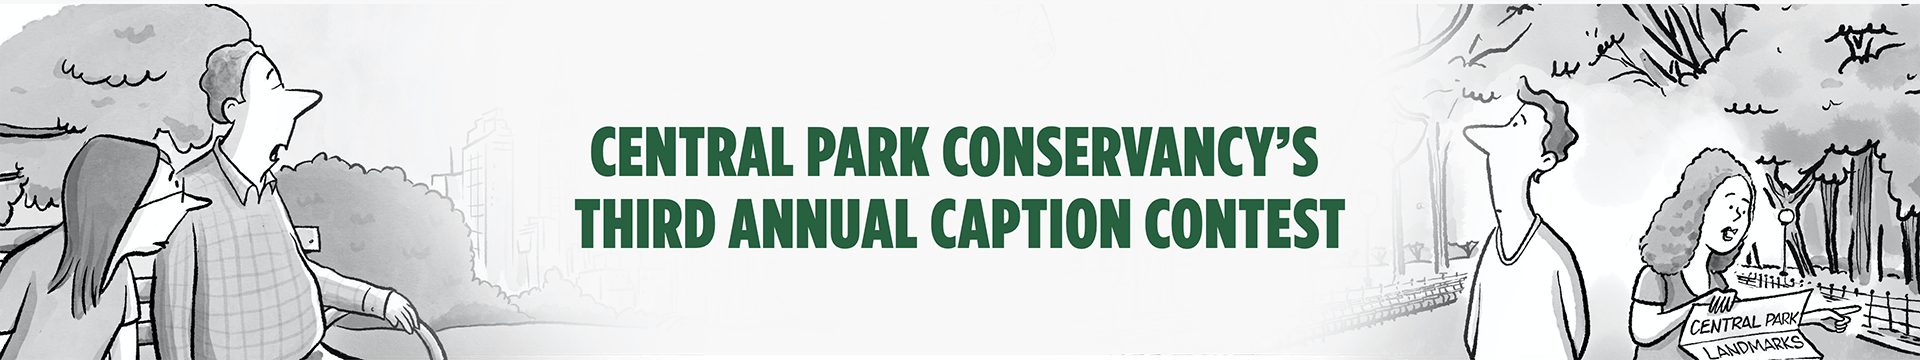 Central Park Conservancy's Third Annual Caption Contest.